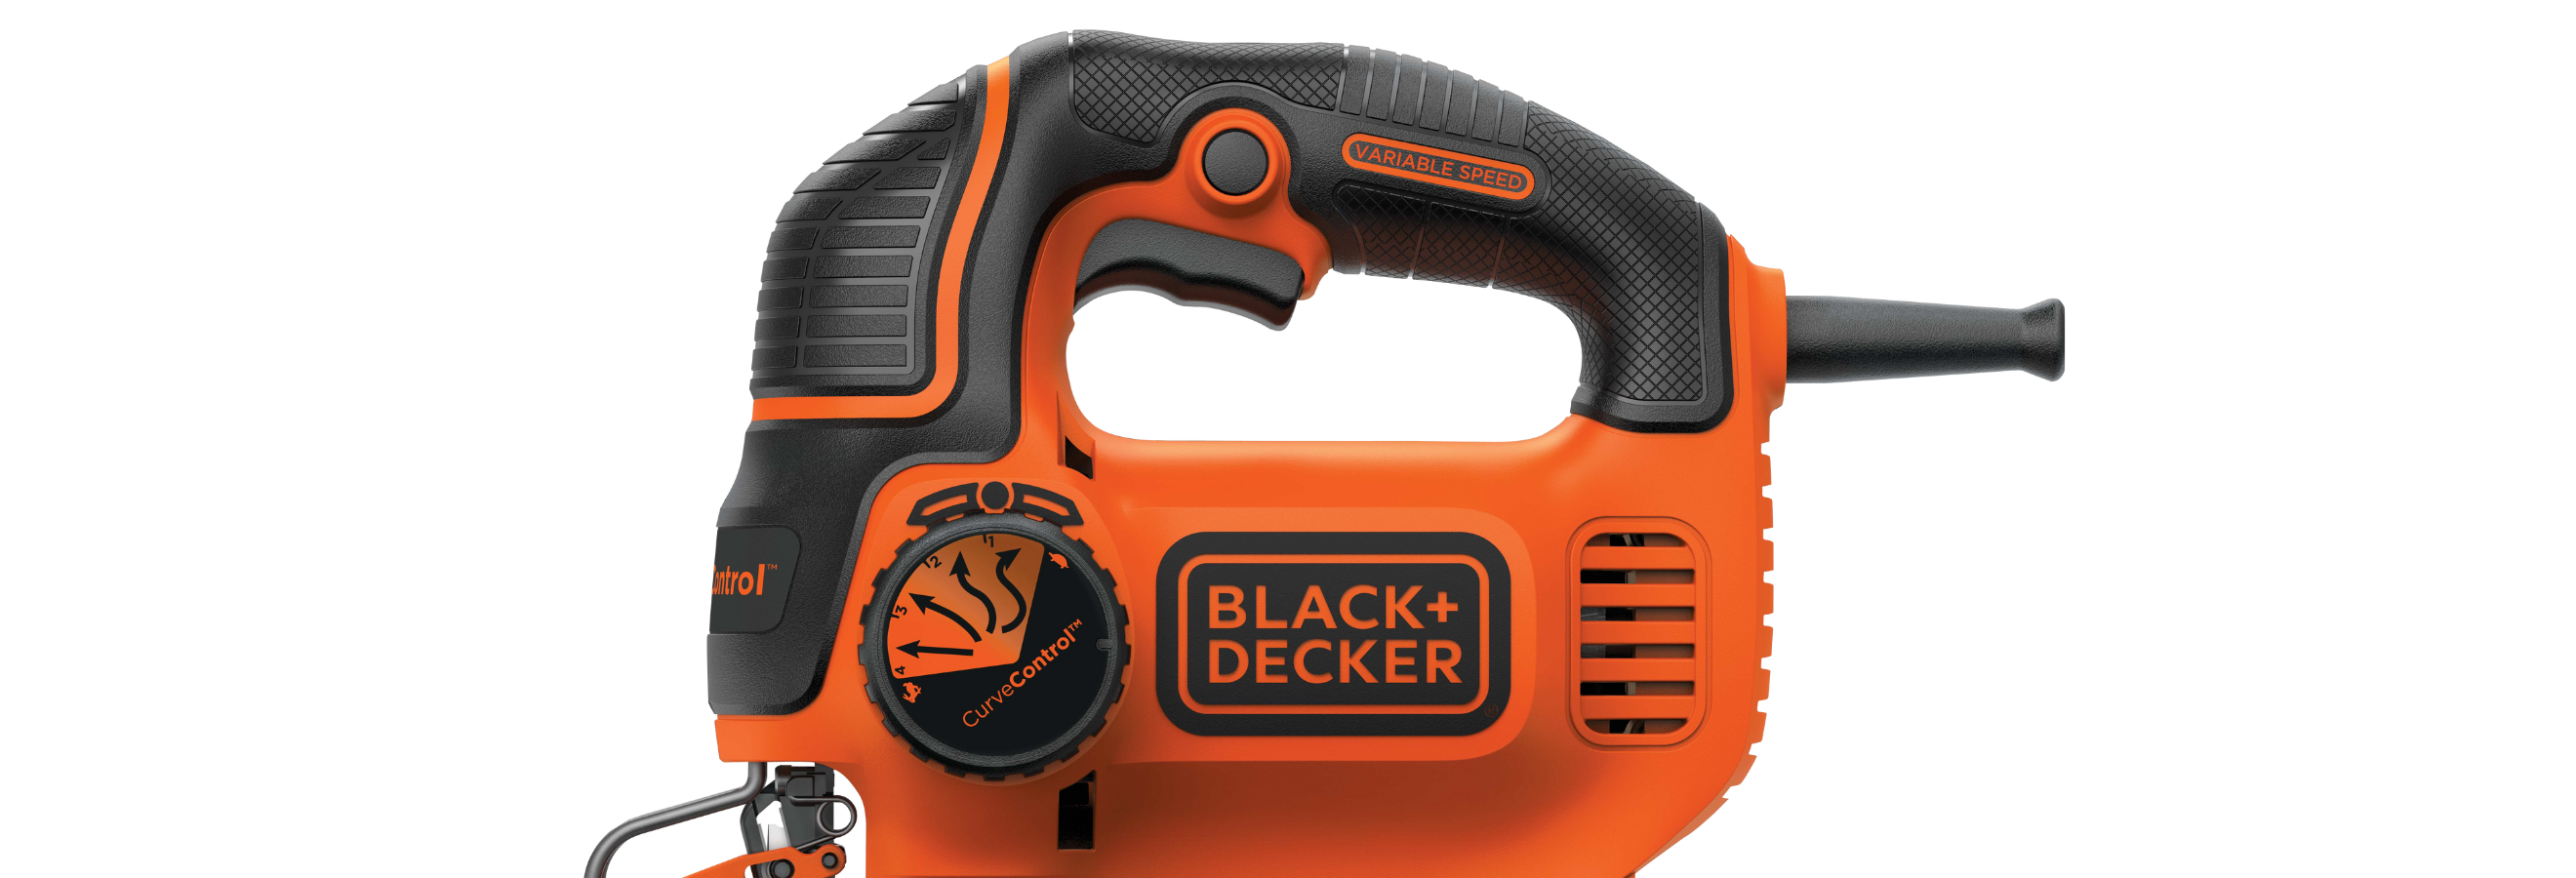 BLACK+DECKER 5 Amp Jig Saw with Curve Control BDEJS600C - The Home Depot